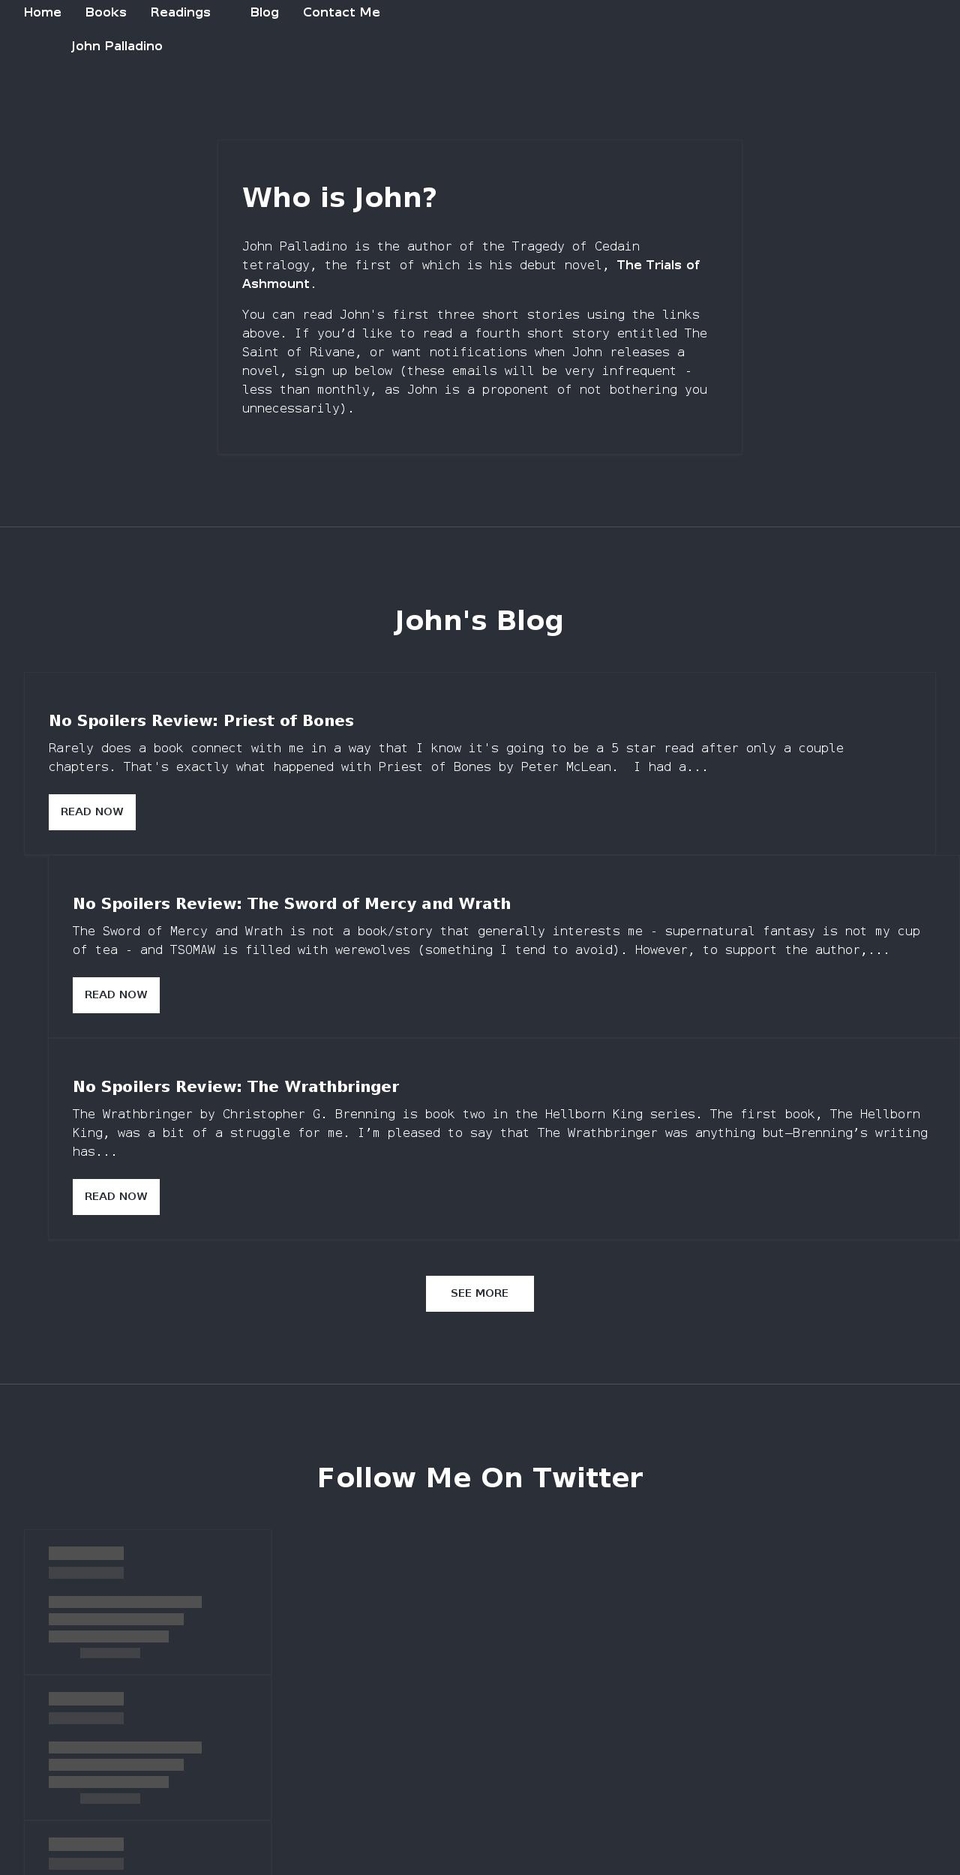 Reach Shopify theme site example johnpalladino.com